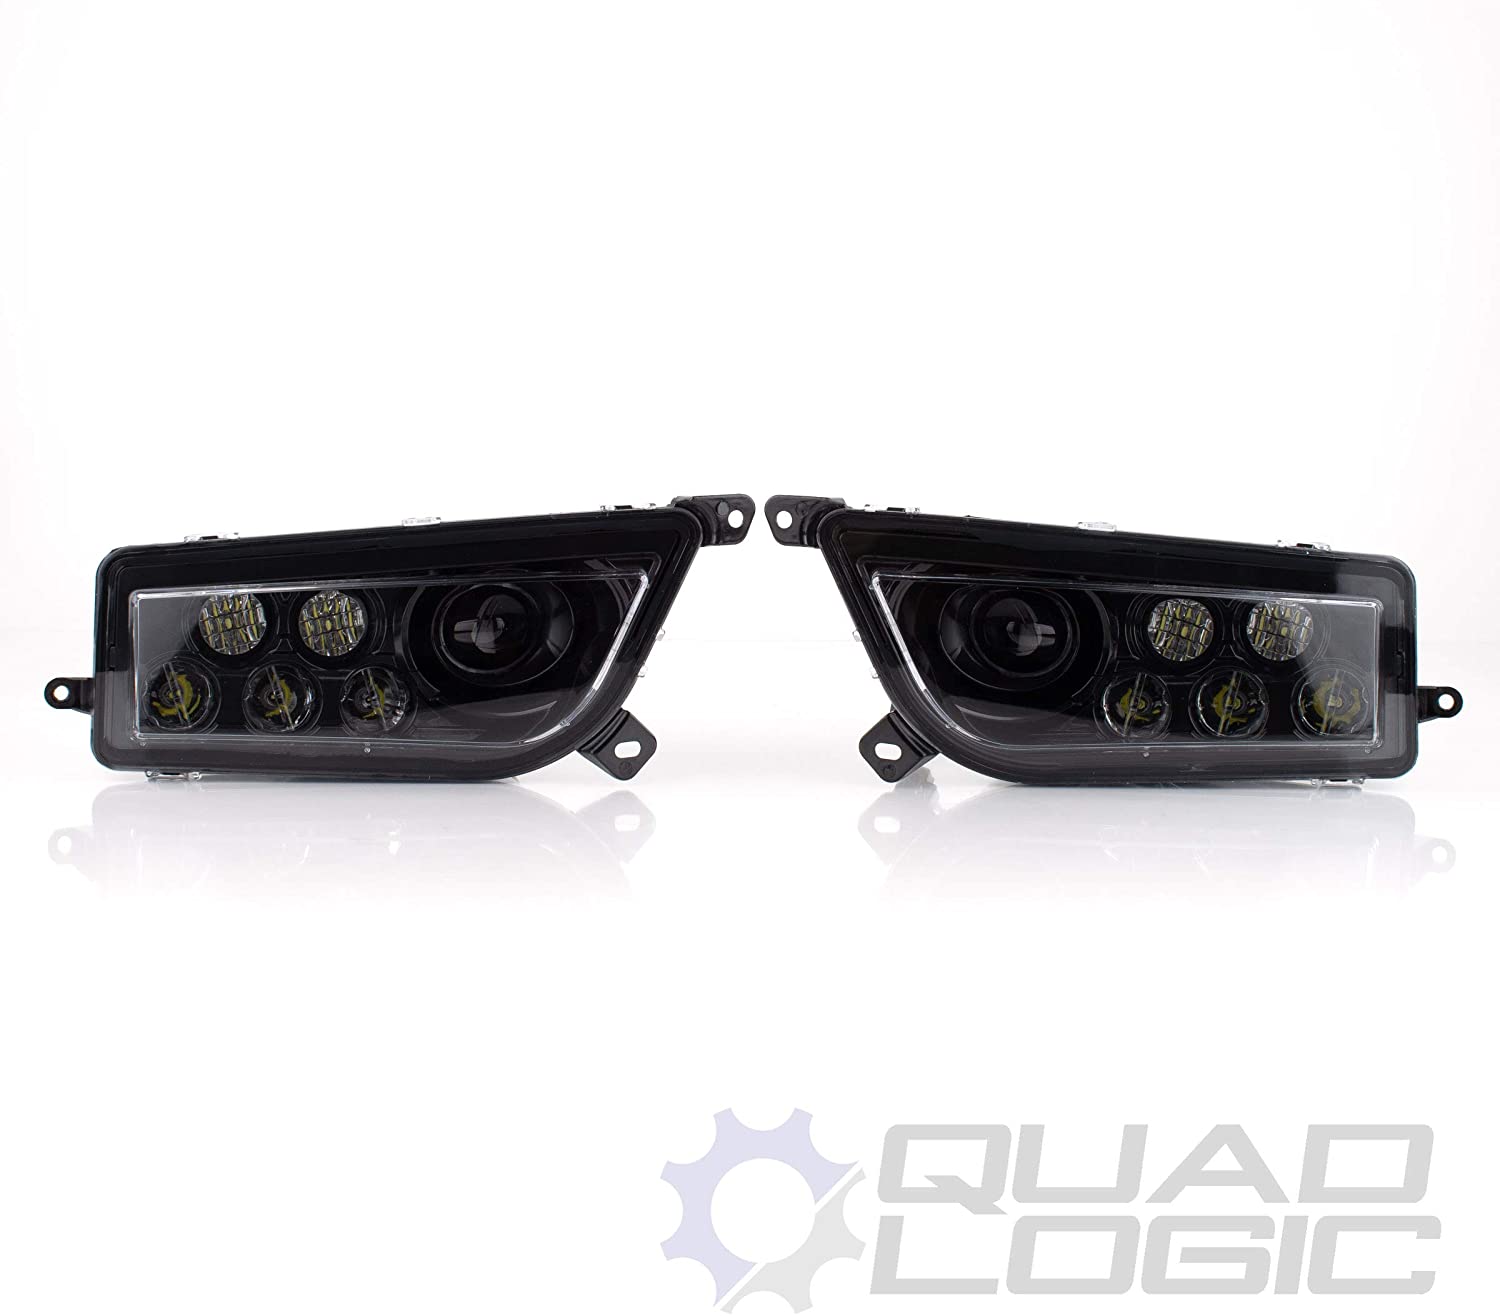 Polaris RZR 900 1000 EFI Blackout HeadLight LED (PAIR) - 2412335 2412336